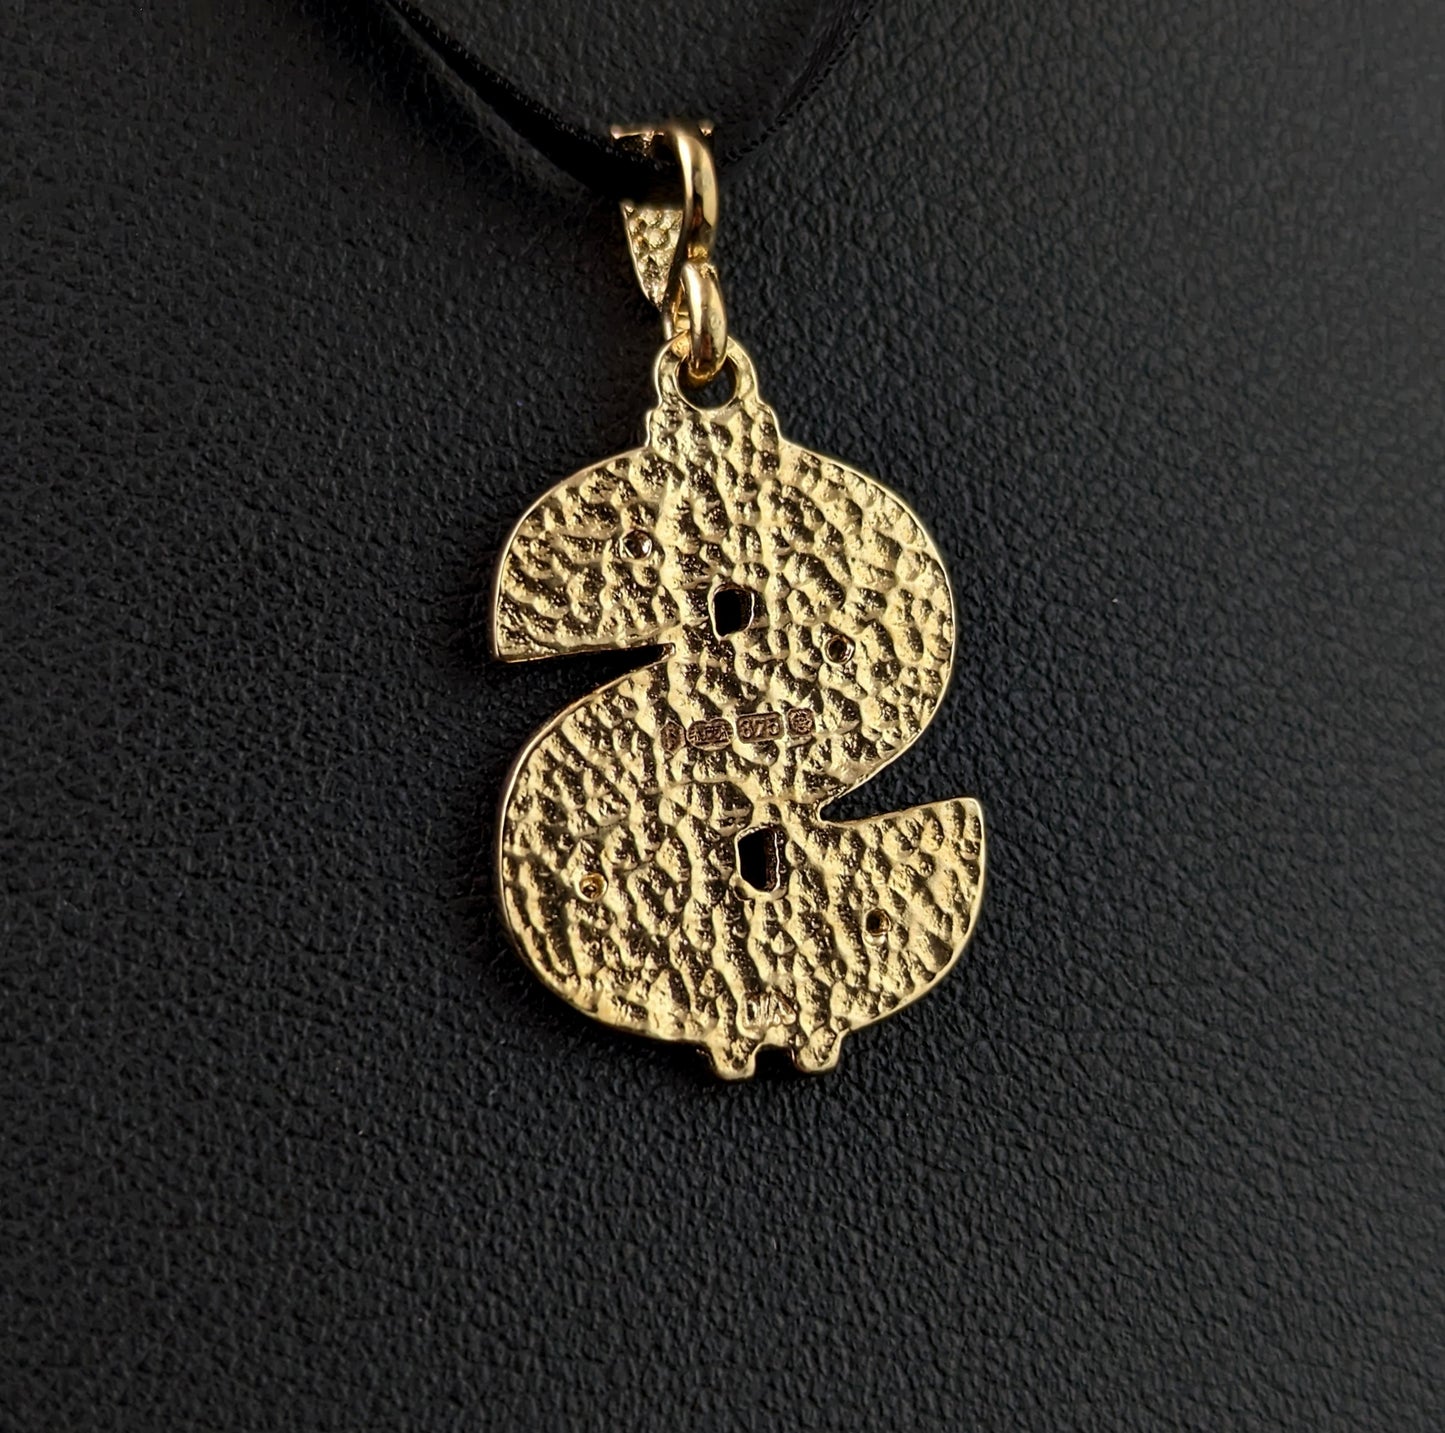 Vintage 9ct gold Diamond Dollar sign pendant